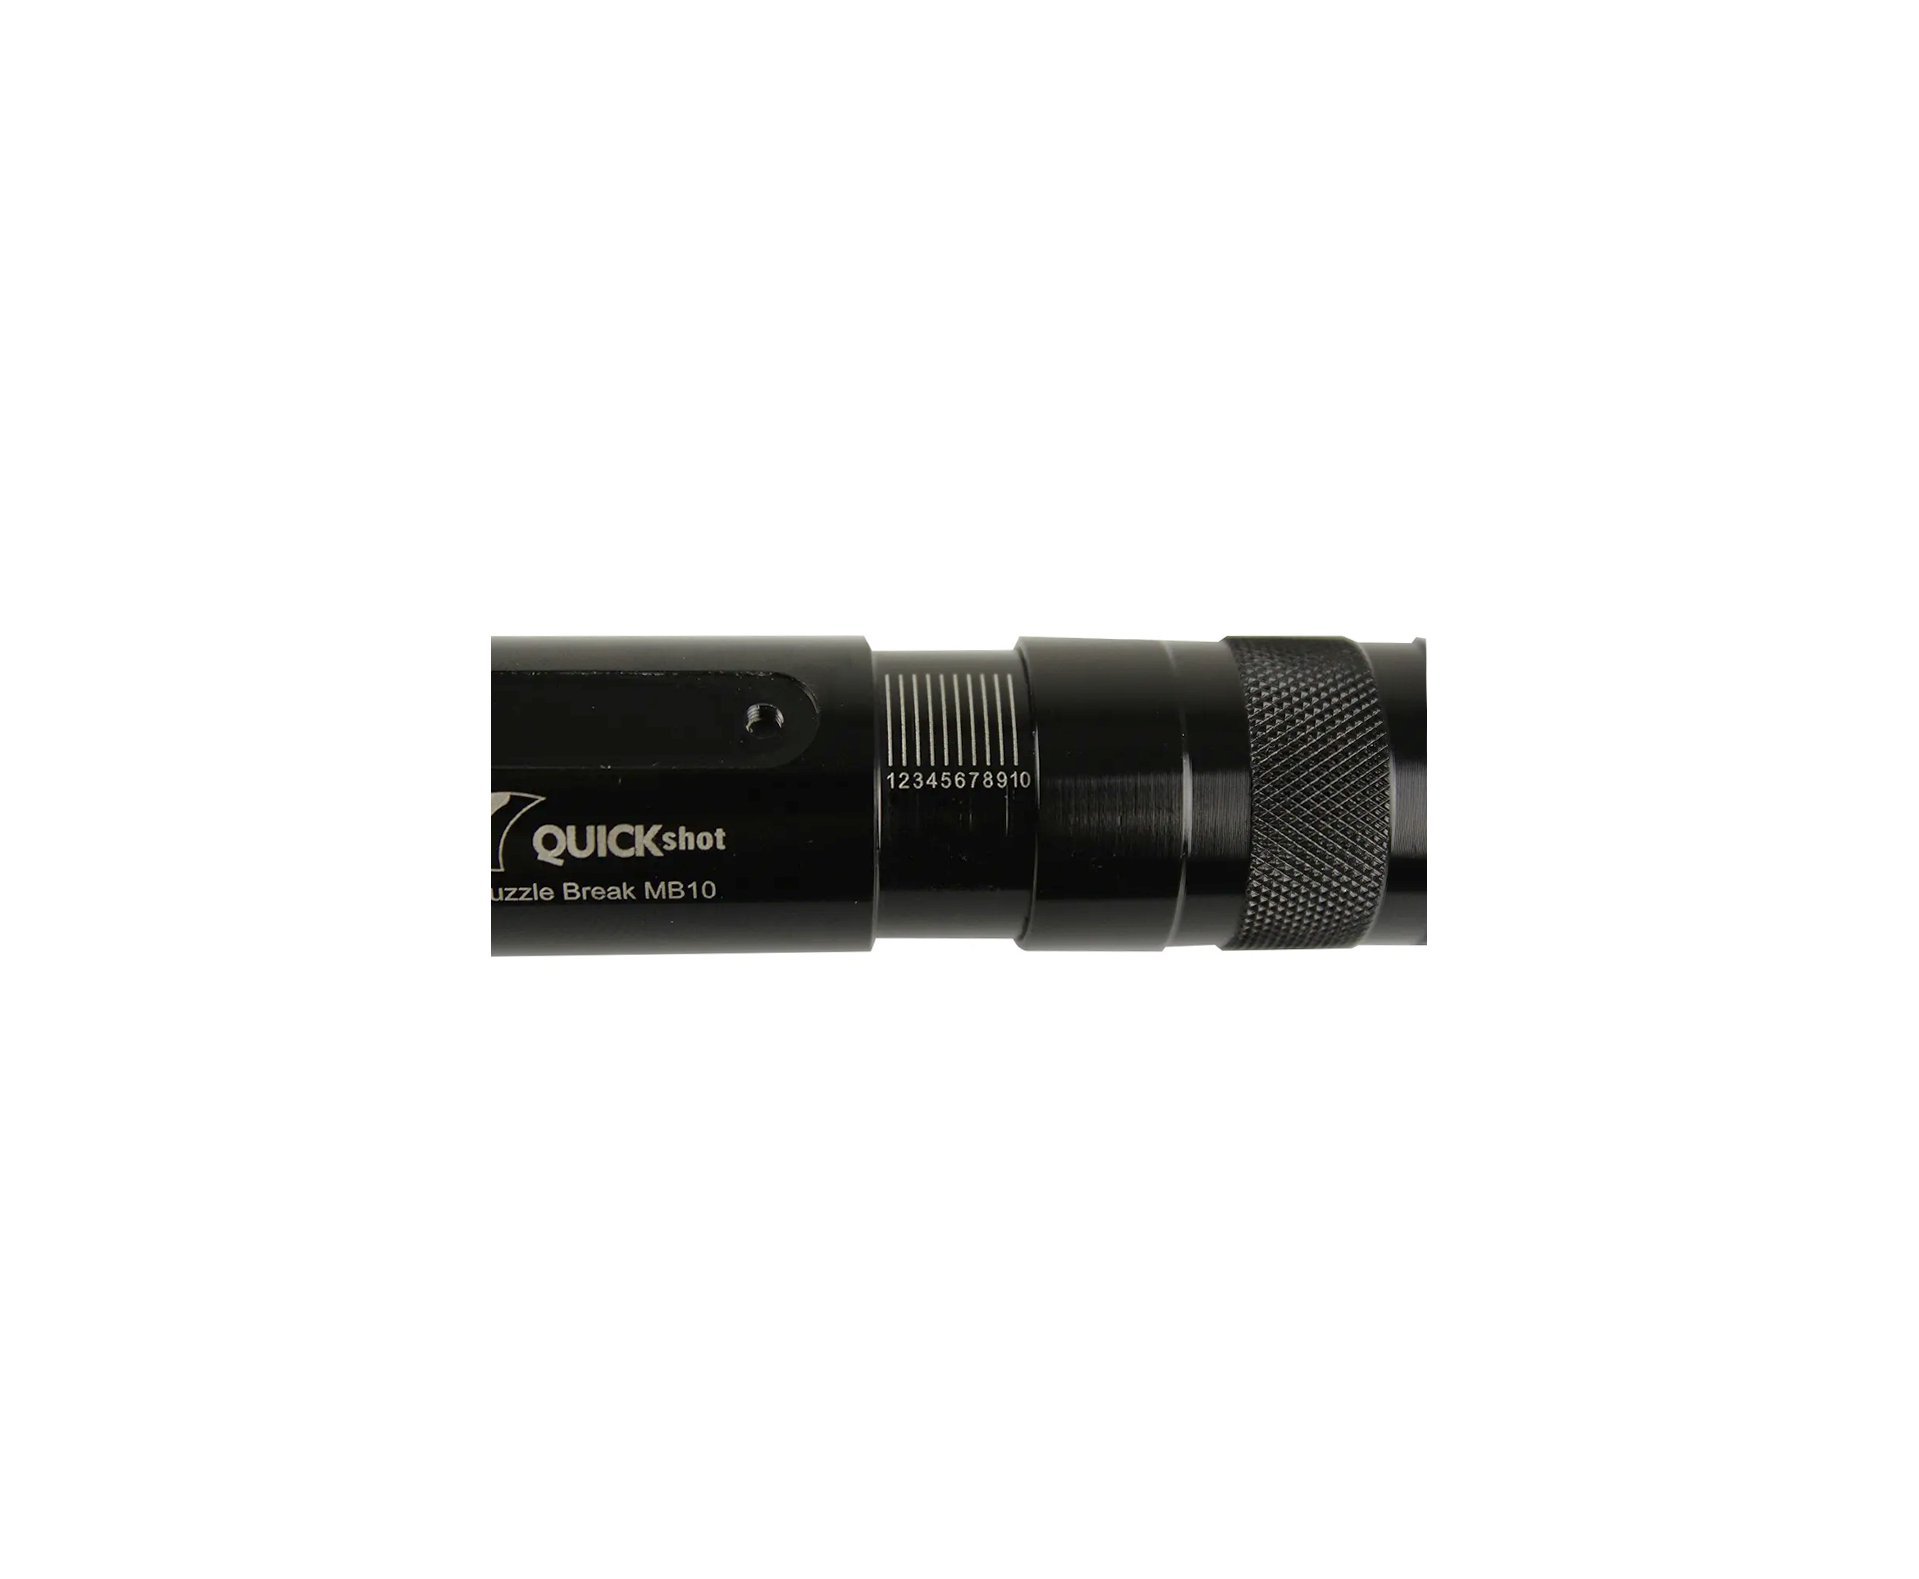 Muzzle Break Pro Ajustavel Carabina Pressão Cano 15mm Preto - Quickshot